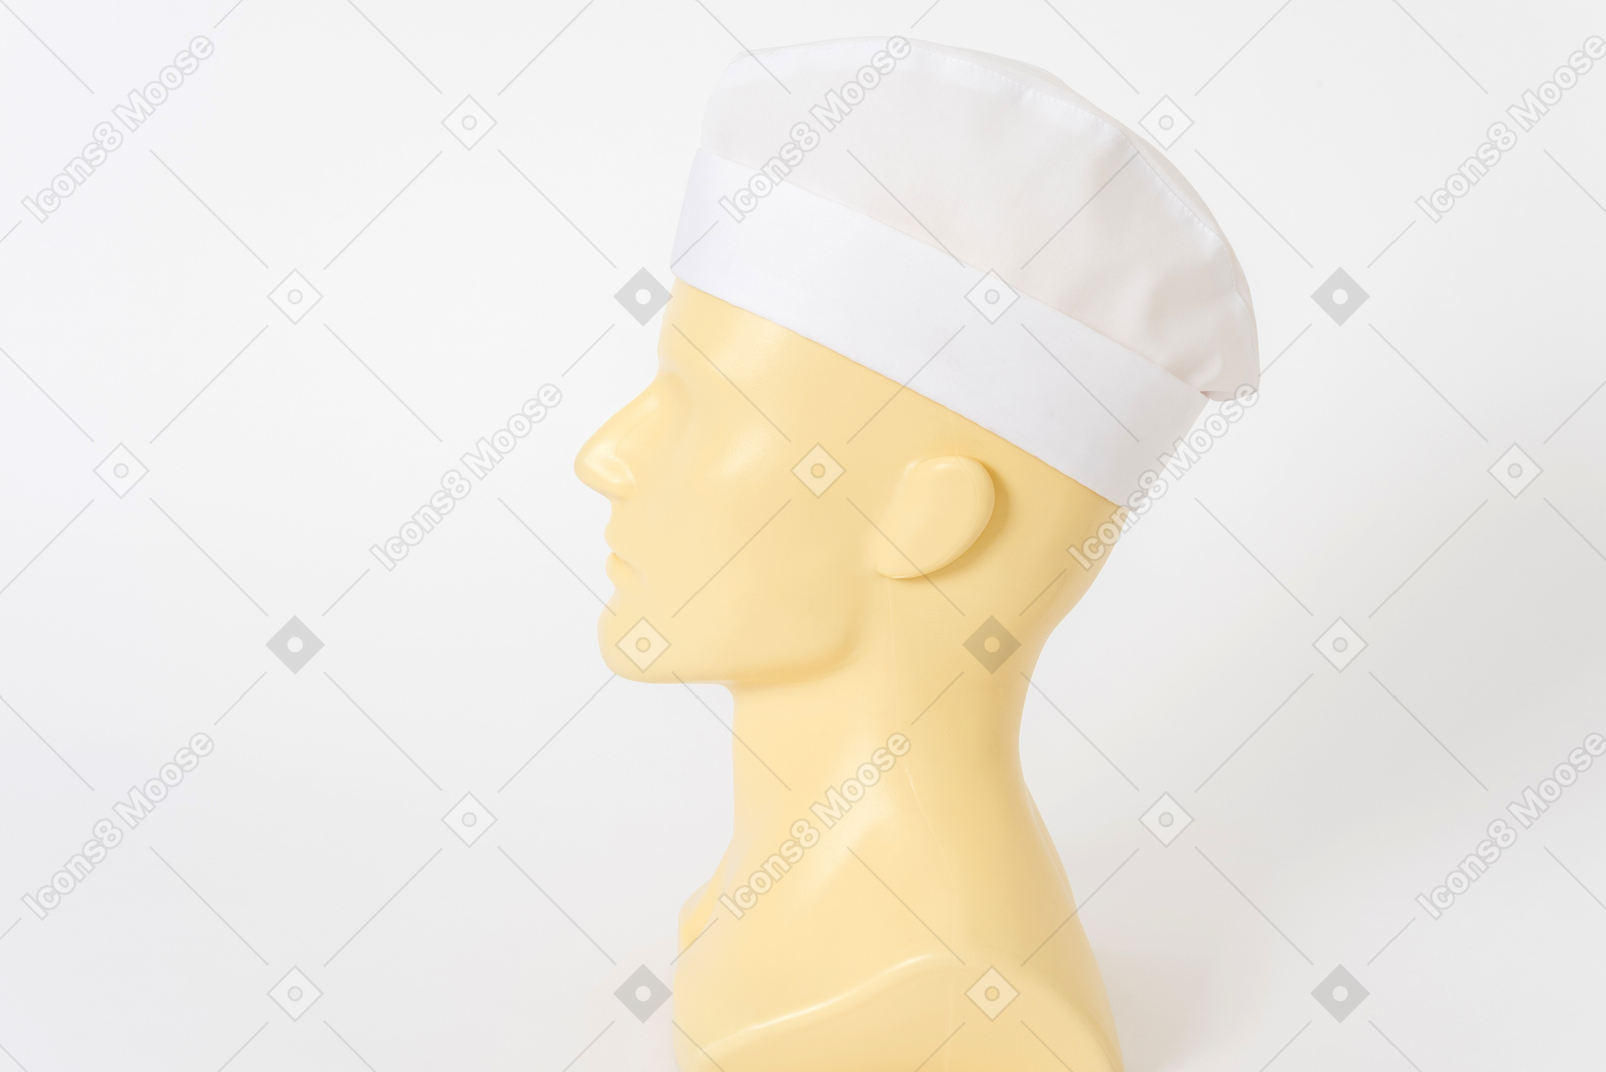 Medical hat on mannequin hat in profile